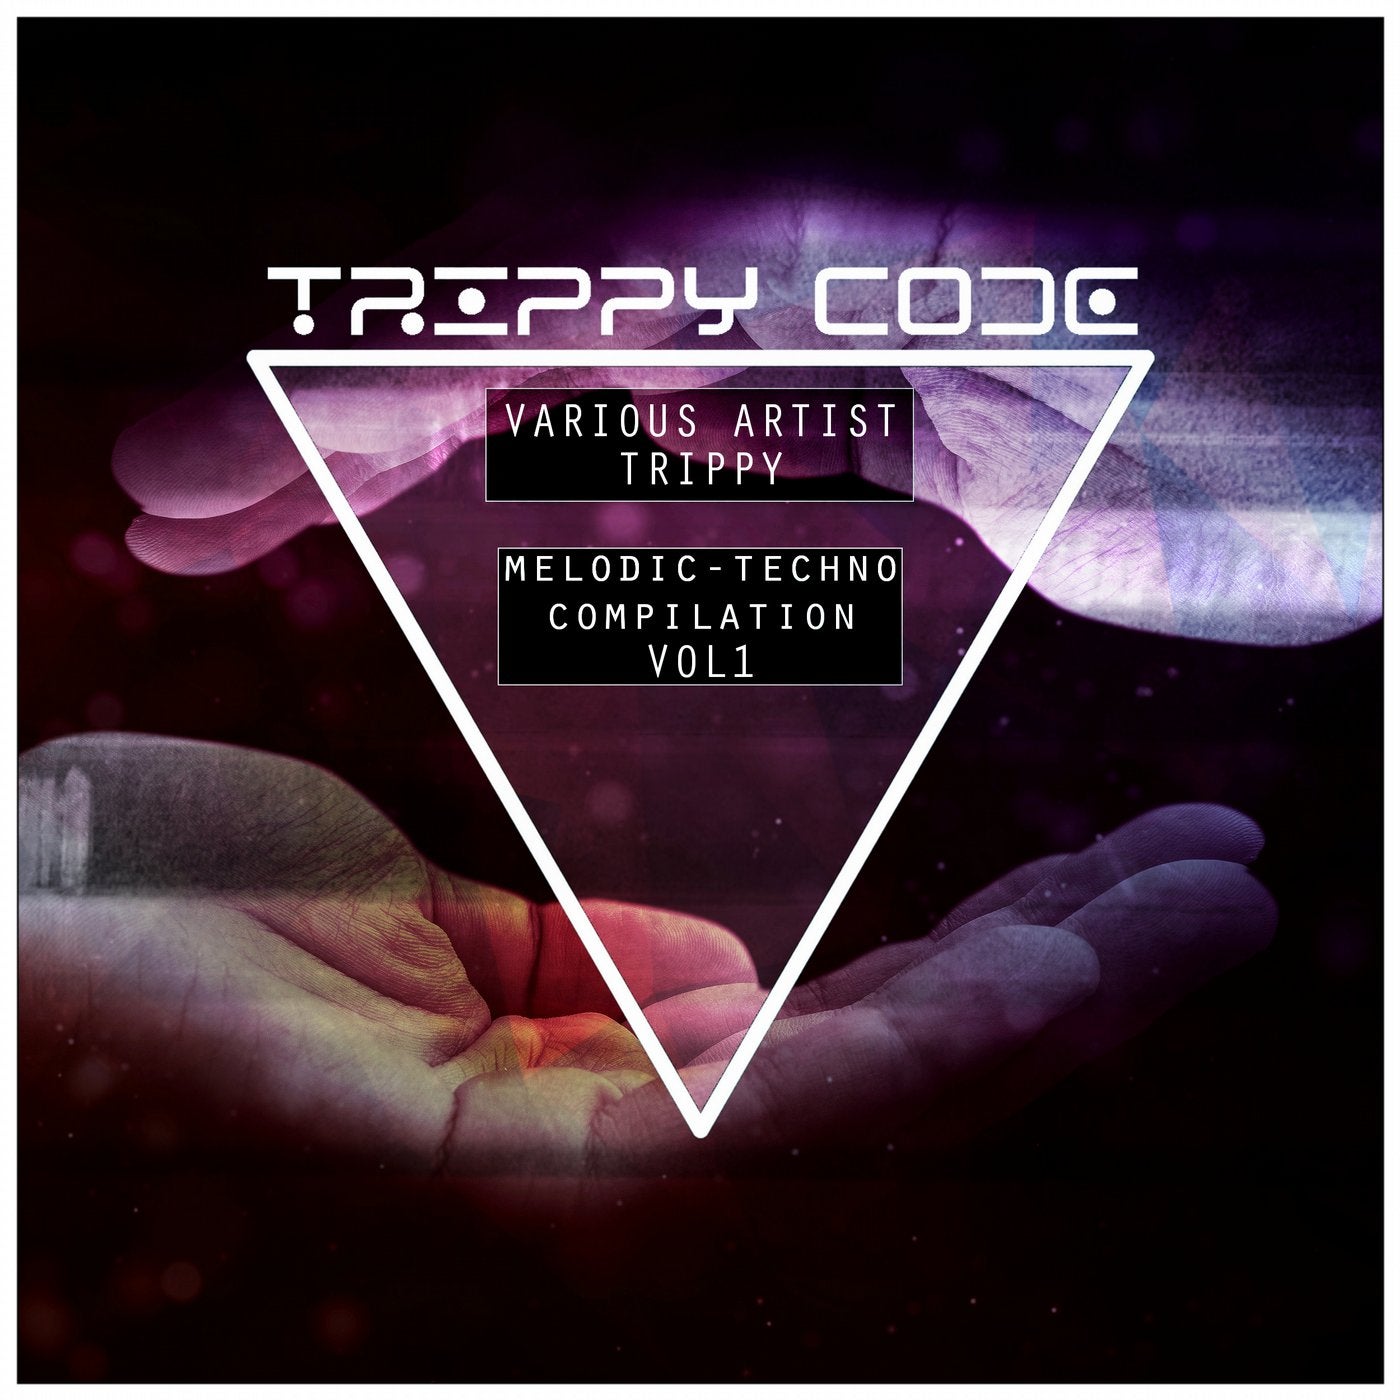 Trippy Melodic Techno Compilation Vol 1.